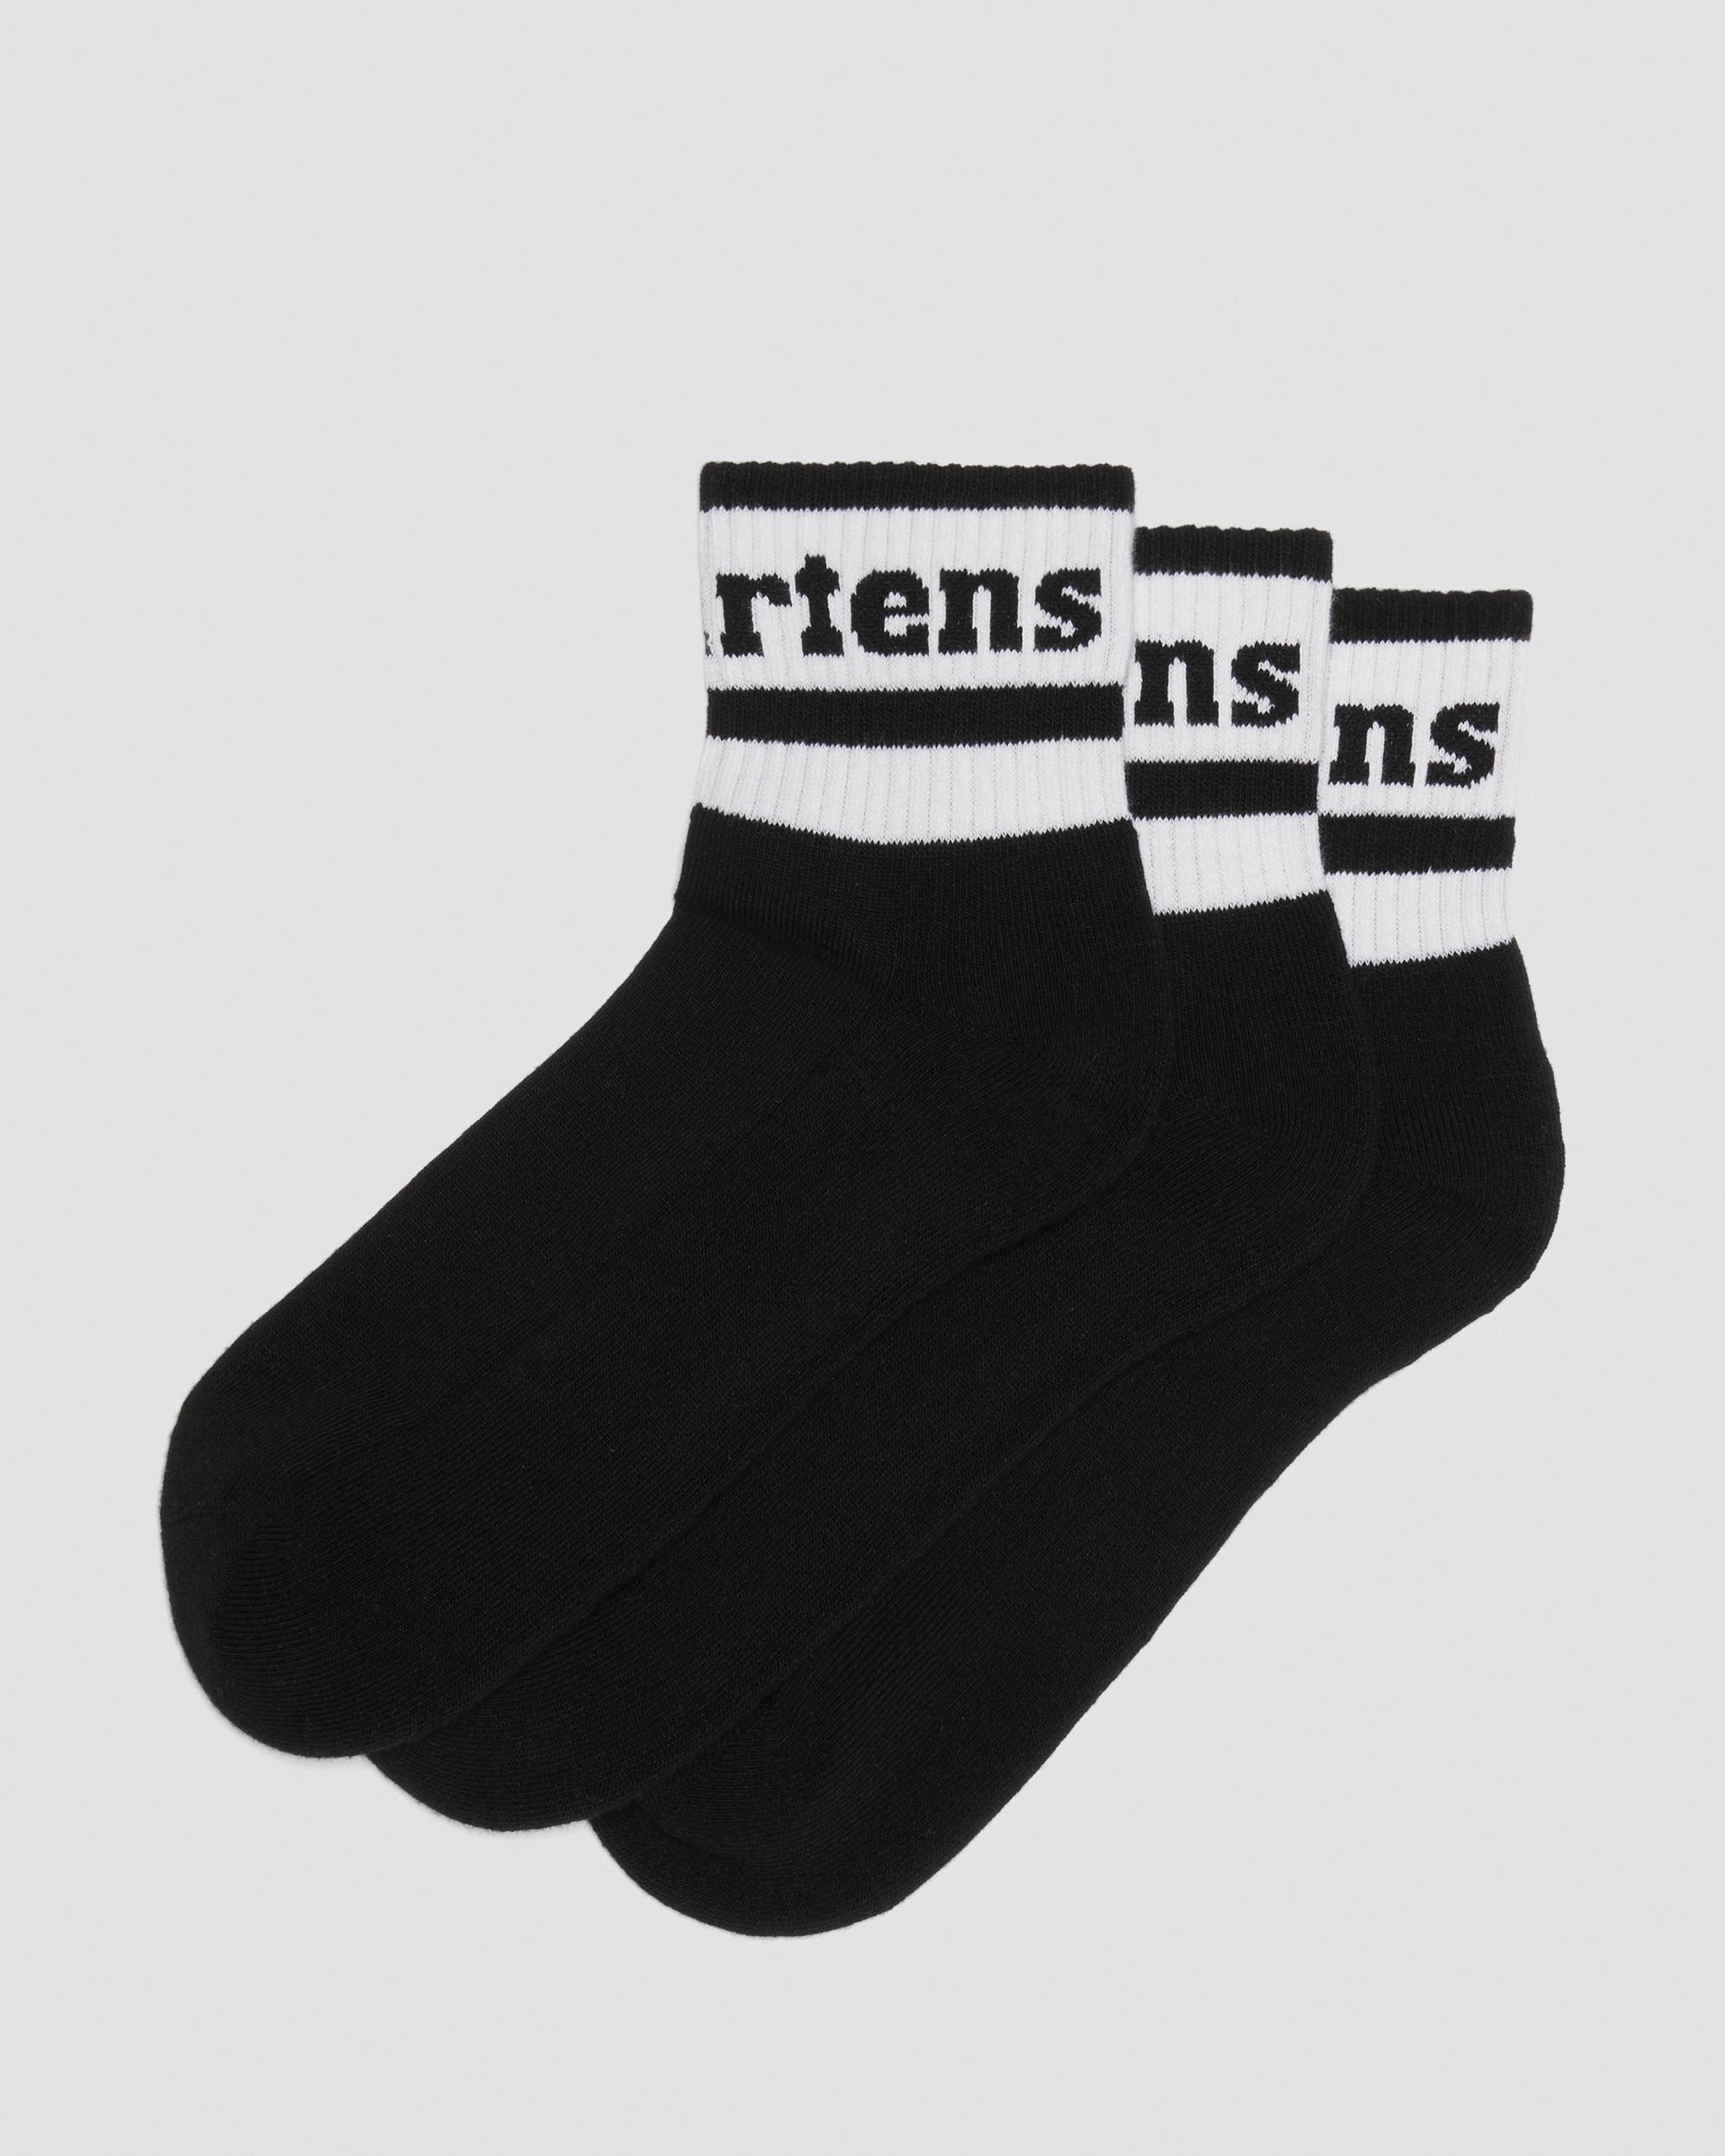 3 Pcs) Mossimo Cotton Spandex Half Terry Sports Ankle Socks